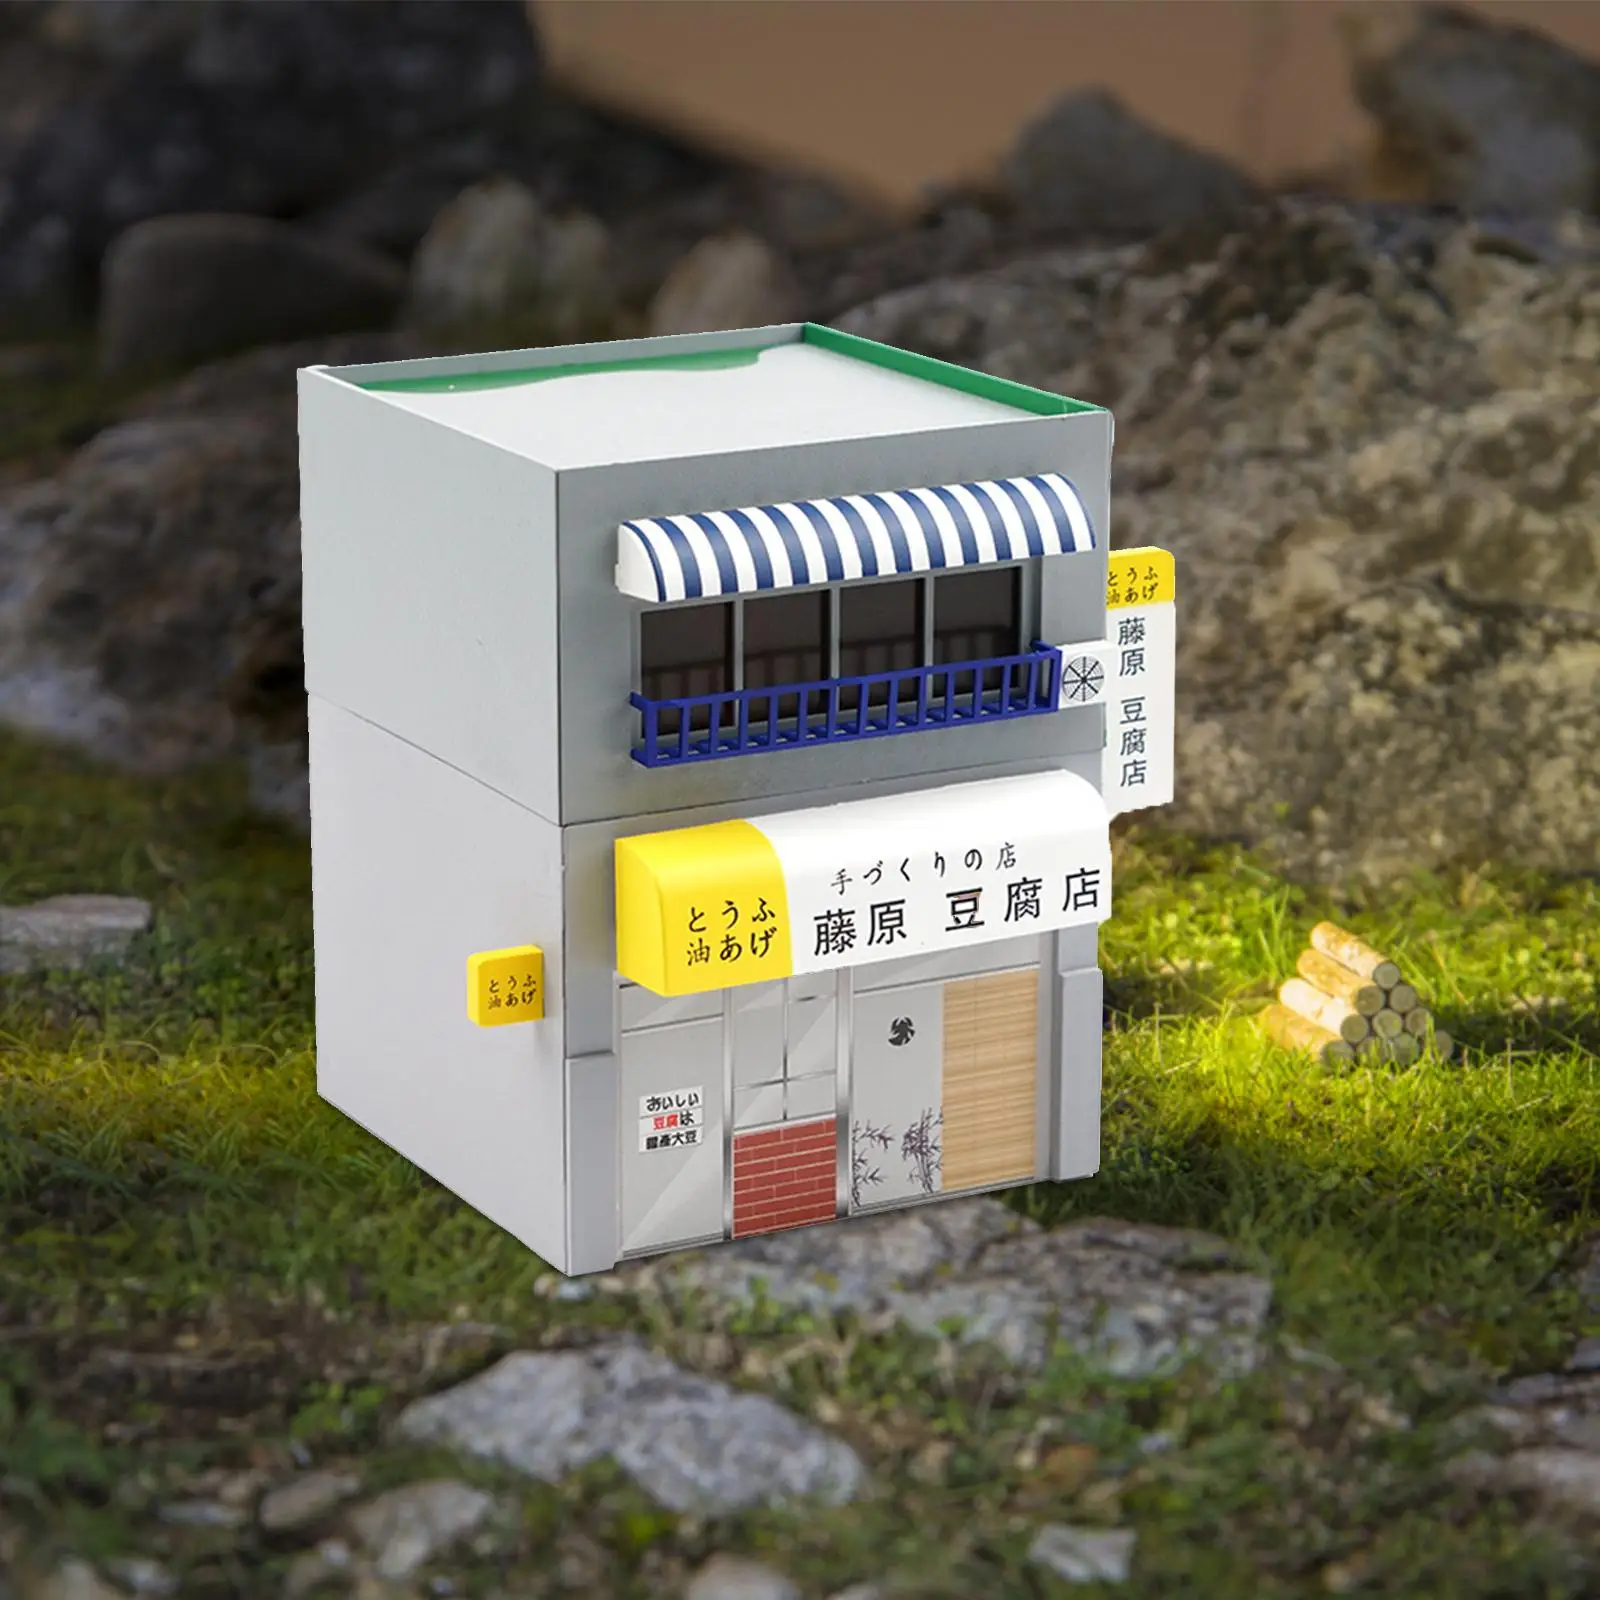 1/64 Tofu Shop Diorama Model Desktop Movie Props S Gauge Scenery Decor